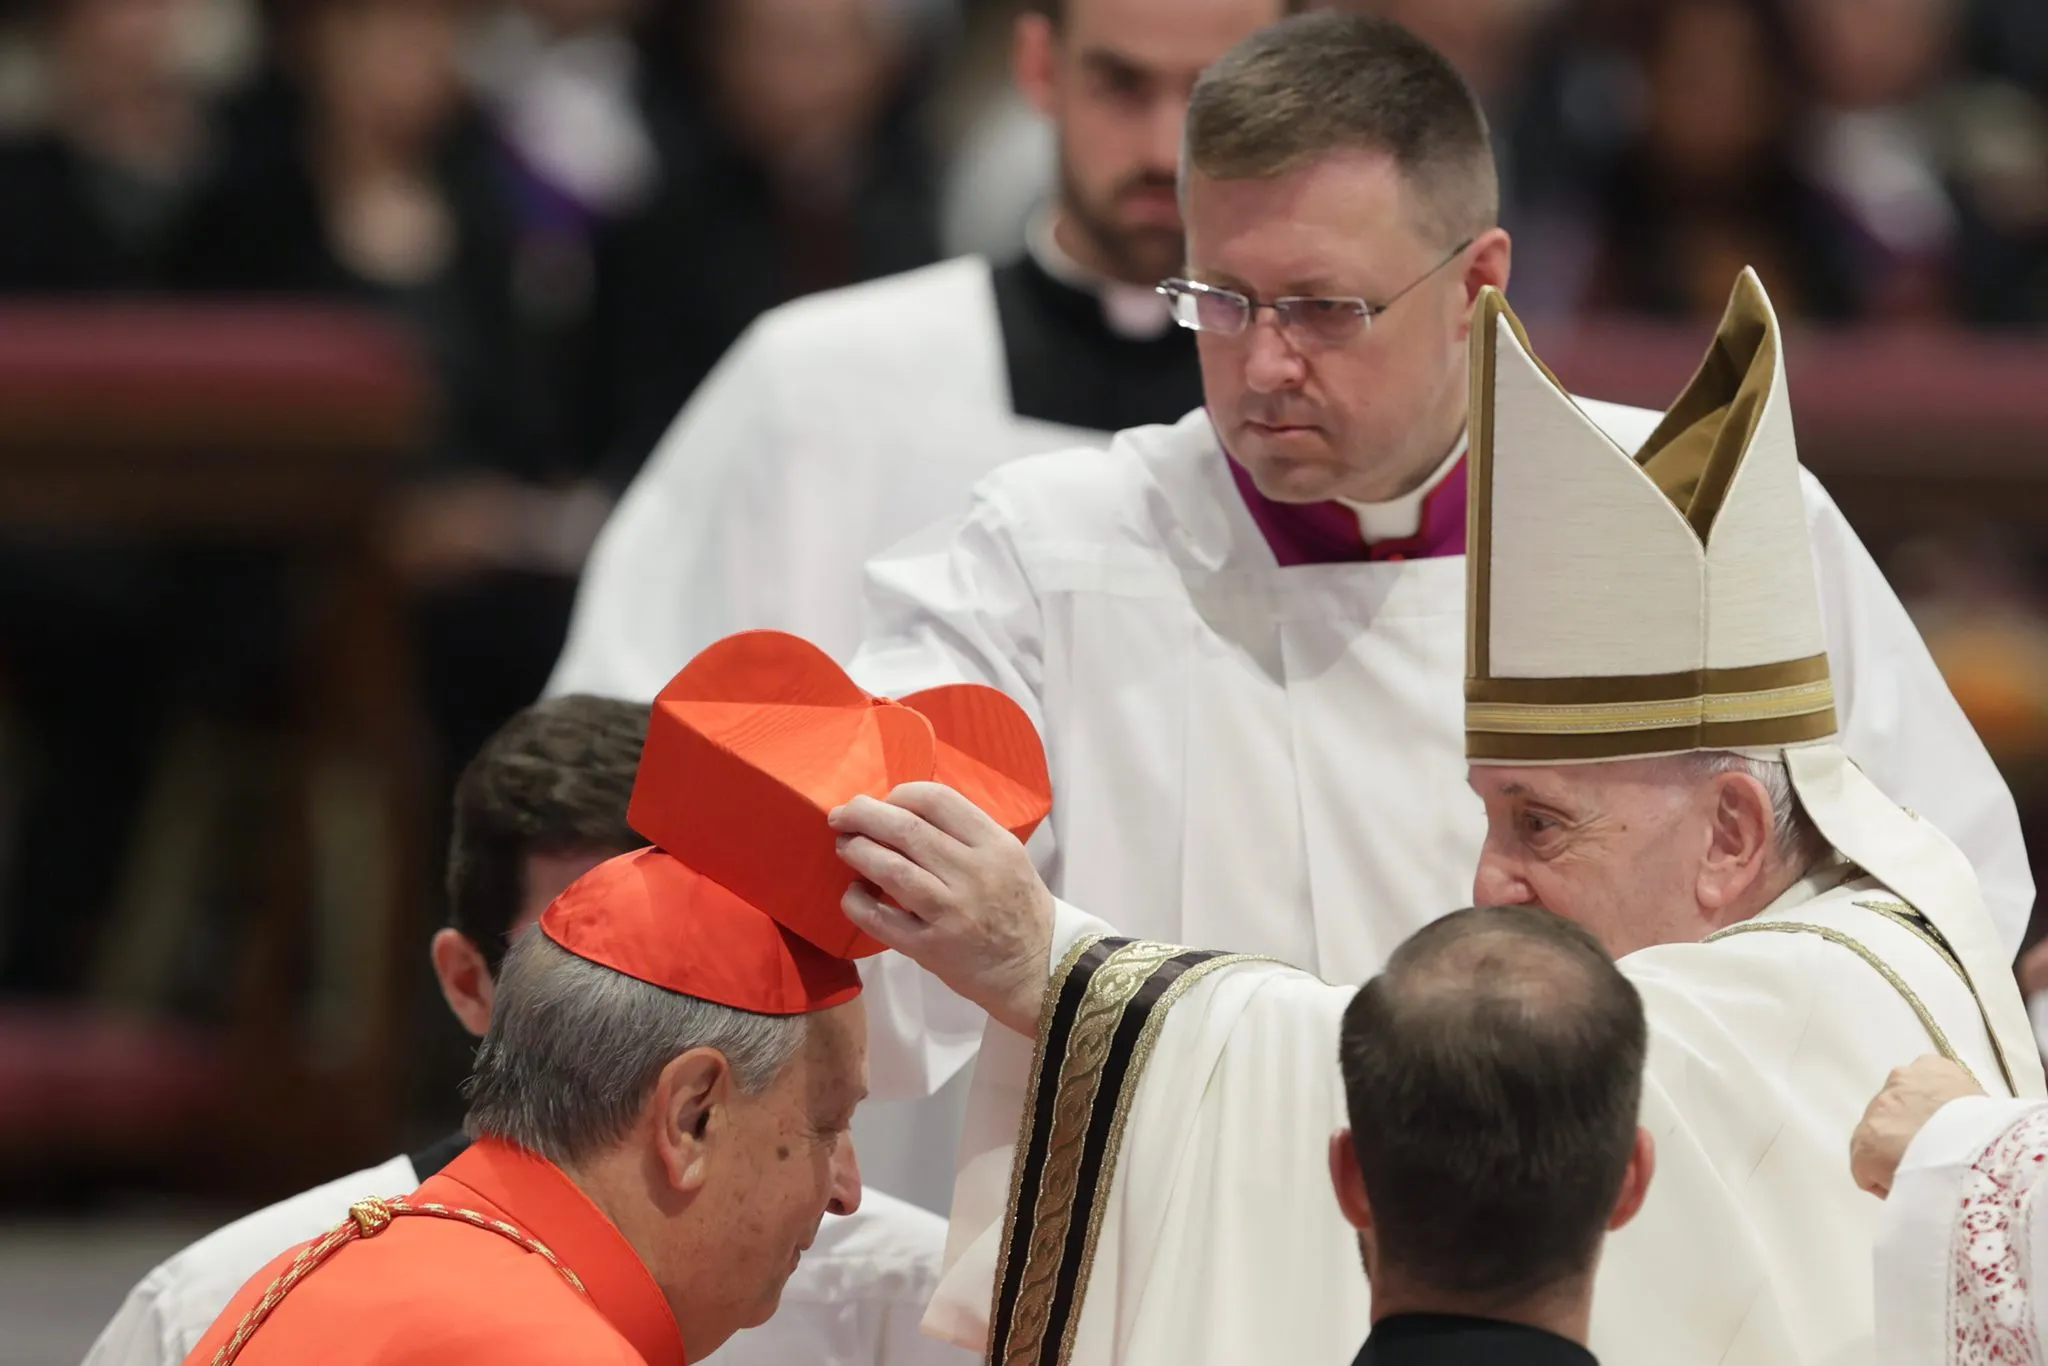 Catholic bishops under fire for denying reproductive healthcare